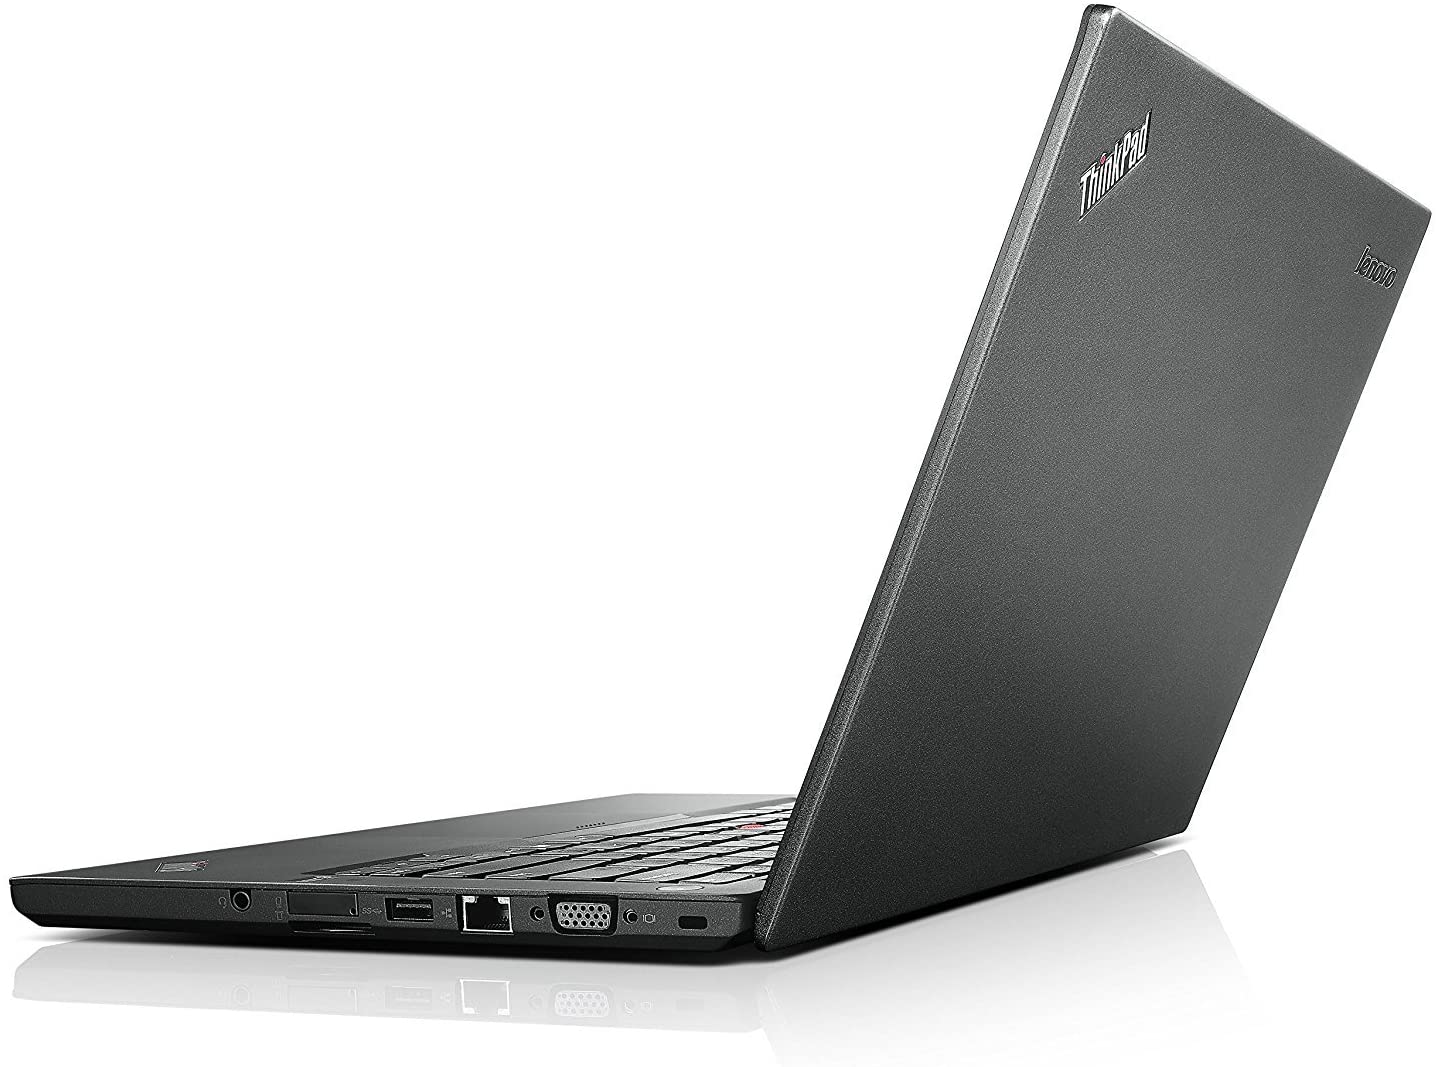 Laptop Lenovo T440, Procesador i5 4200U 2.3 GHz, 4ta gen,  8Gb Ram, Disco duro 500Gb,  Display 14", Webcam, Teclado Ingles, no DVD-RW,  Refurbished B,  garantia 1 año